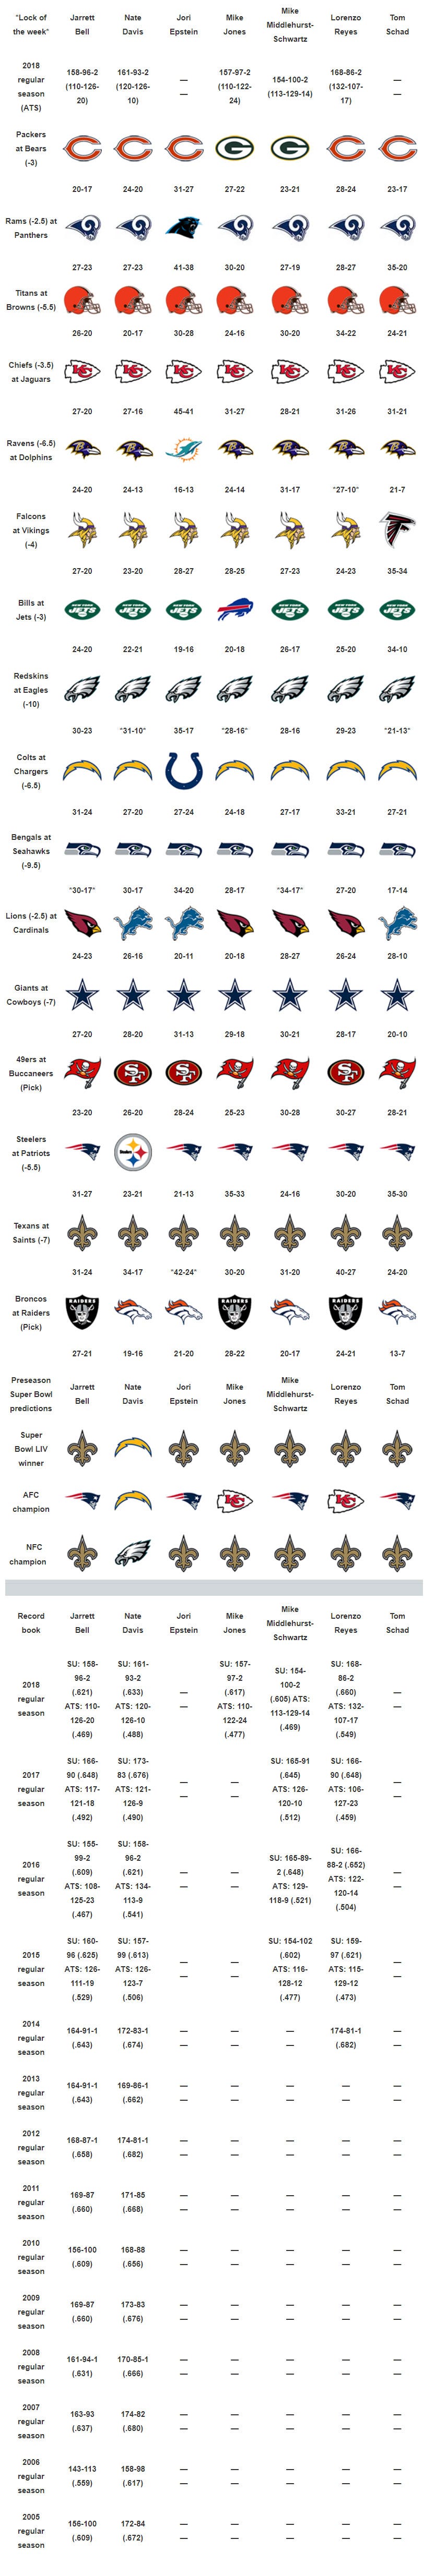 NFL Week 7 Predictions: Upset picks, betting locks, and more